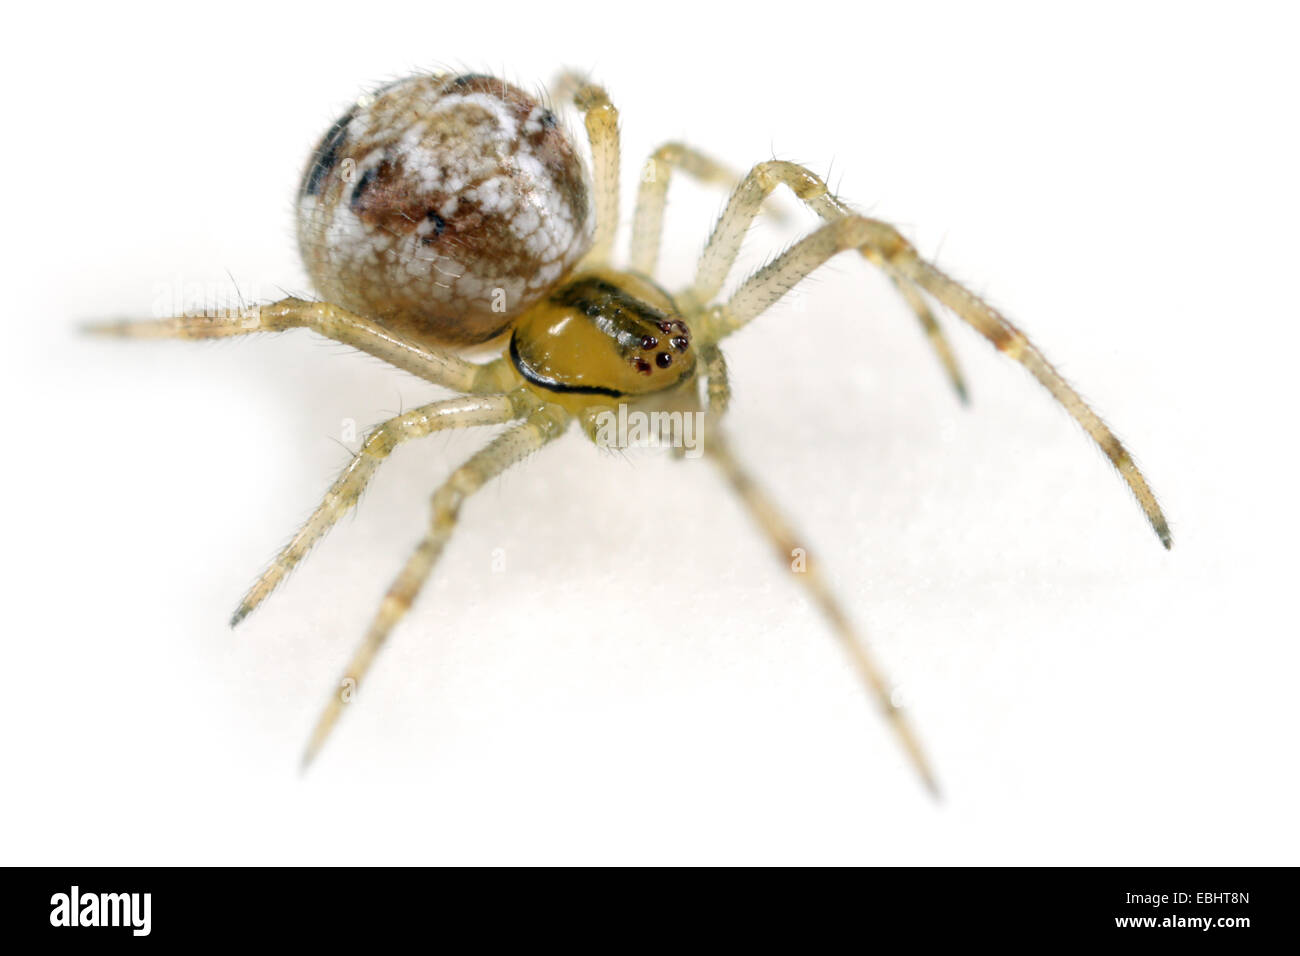 Hembra (Theridion Phylloneta impressa araña impressum) sobre fondo blanco. Familia Theridiidae, peine-footed arañas o telaraña tejedores. Foto de stock